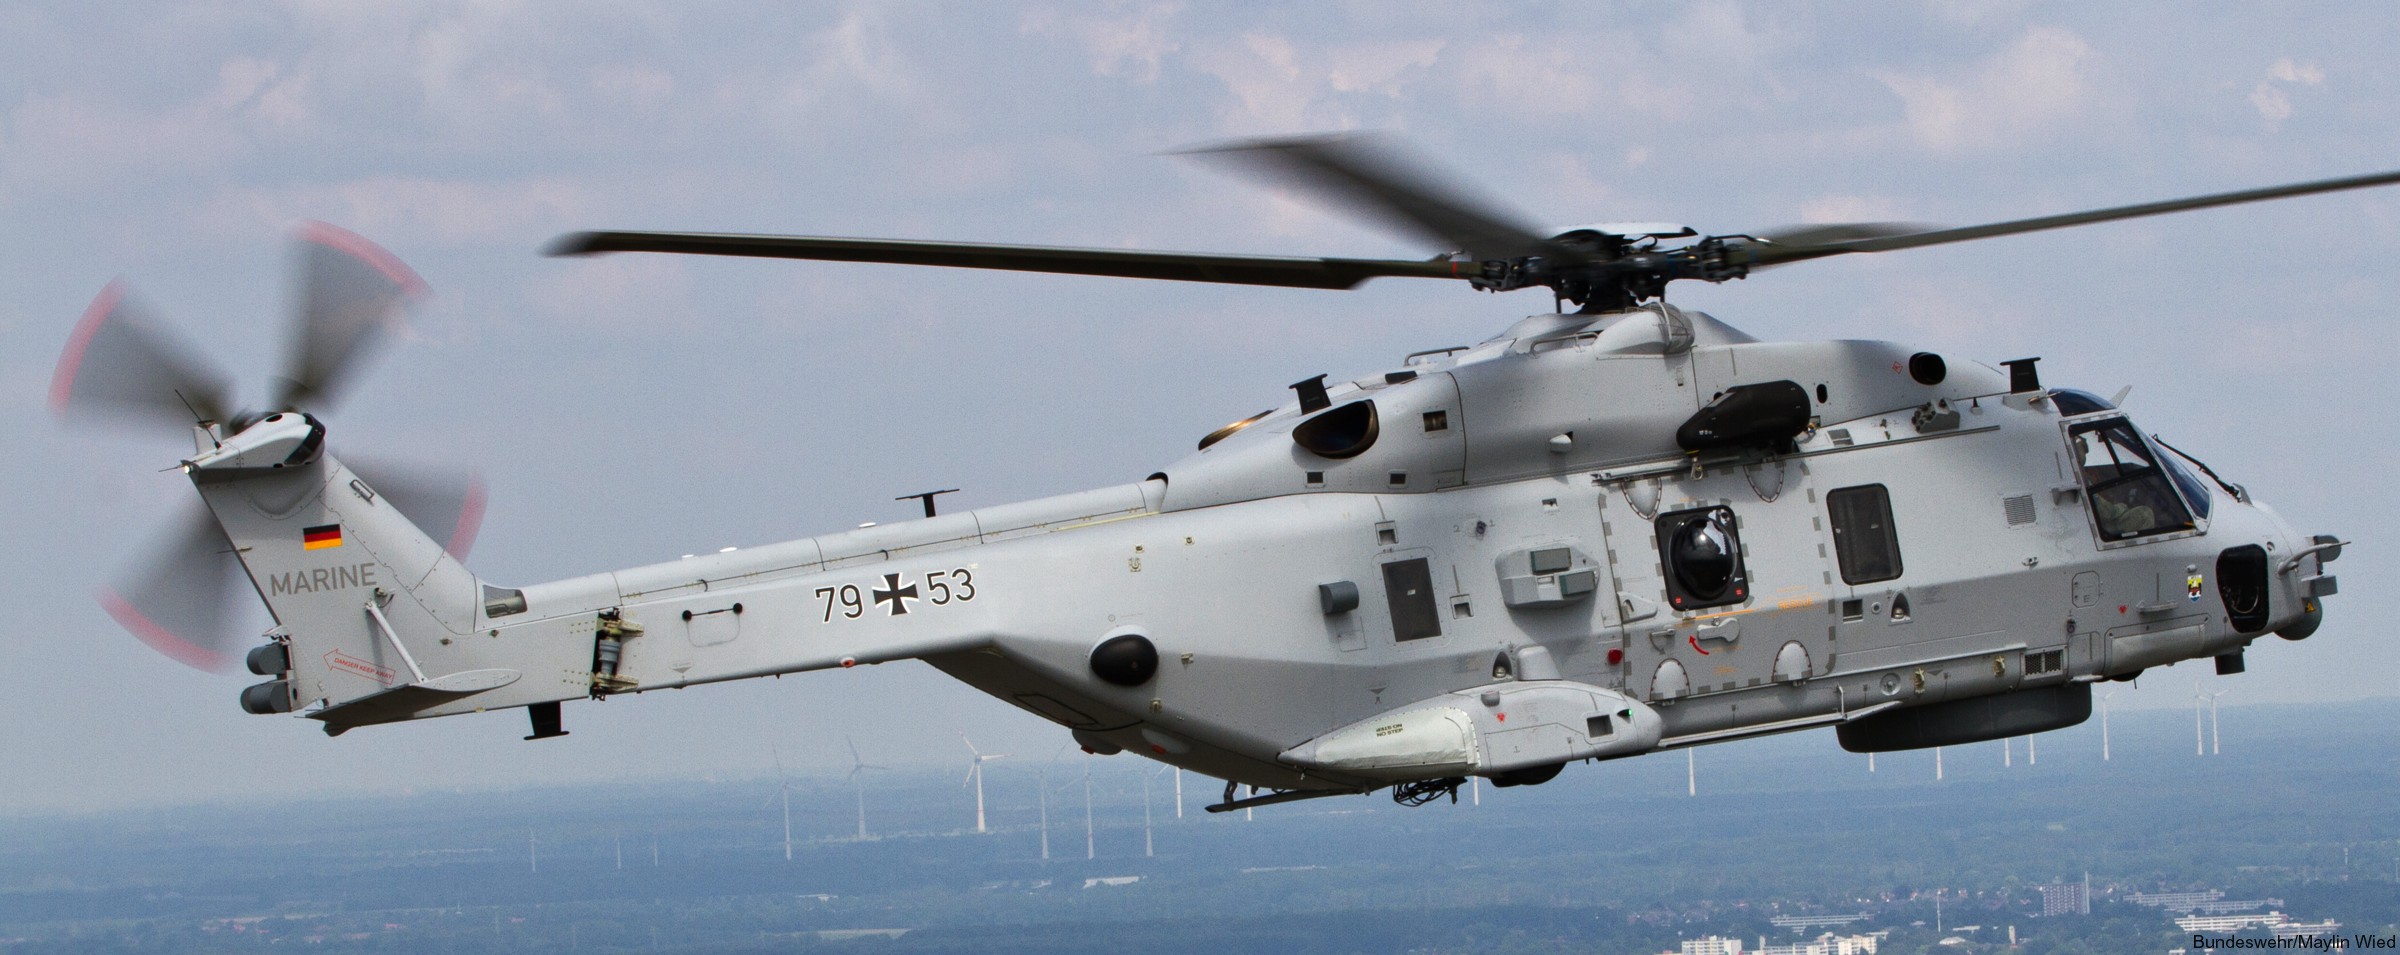 nh-90 nth sea lion helicopter german navy deutsche marine nhindustries mfg-5 nordholz 06x